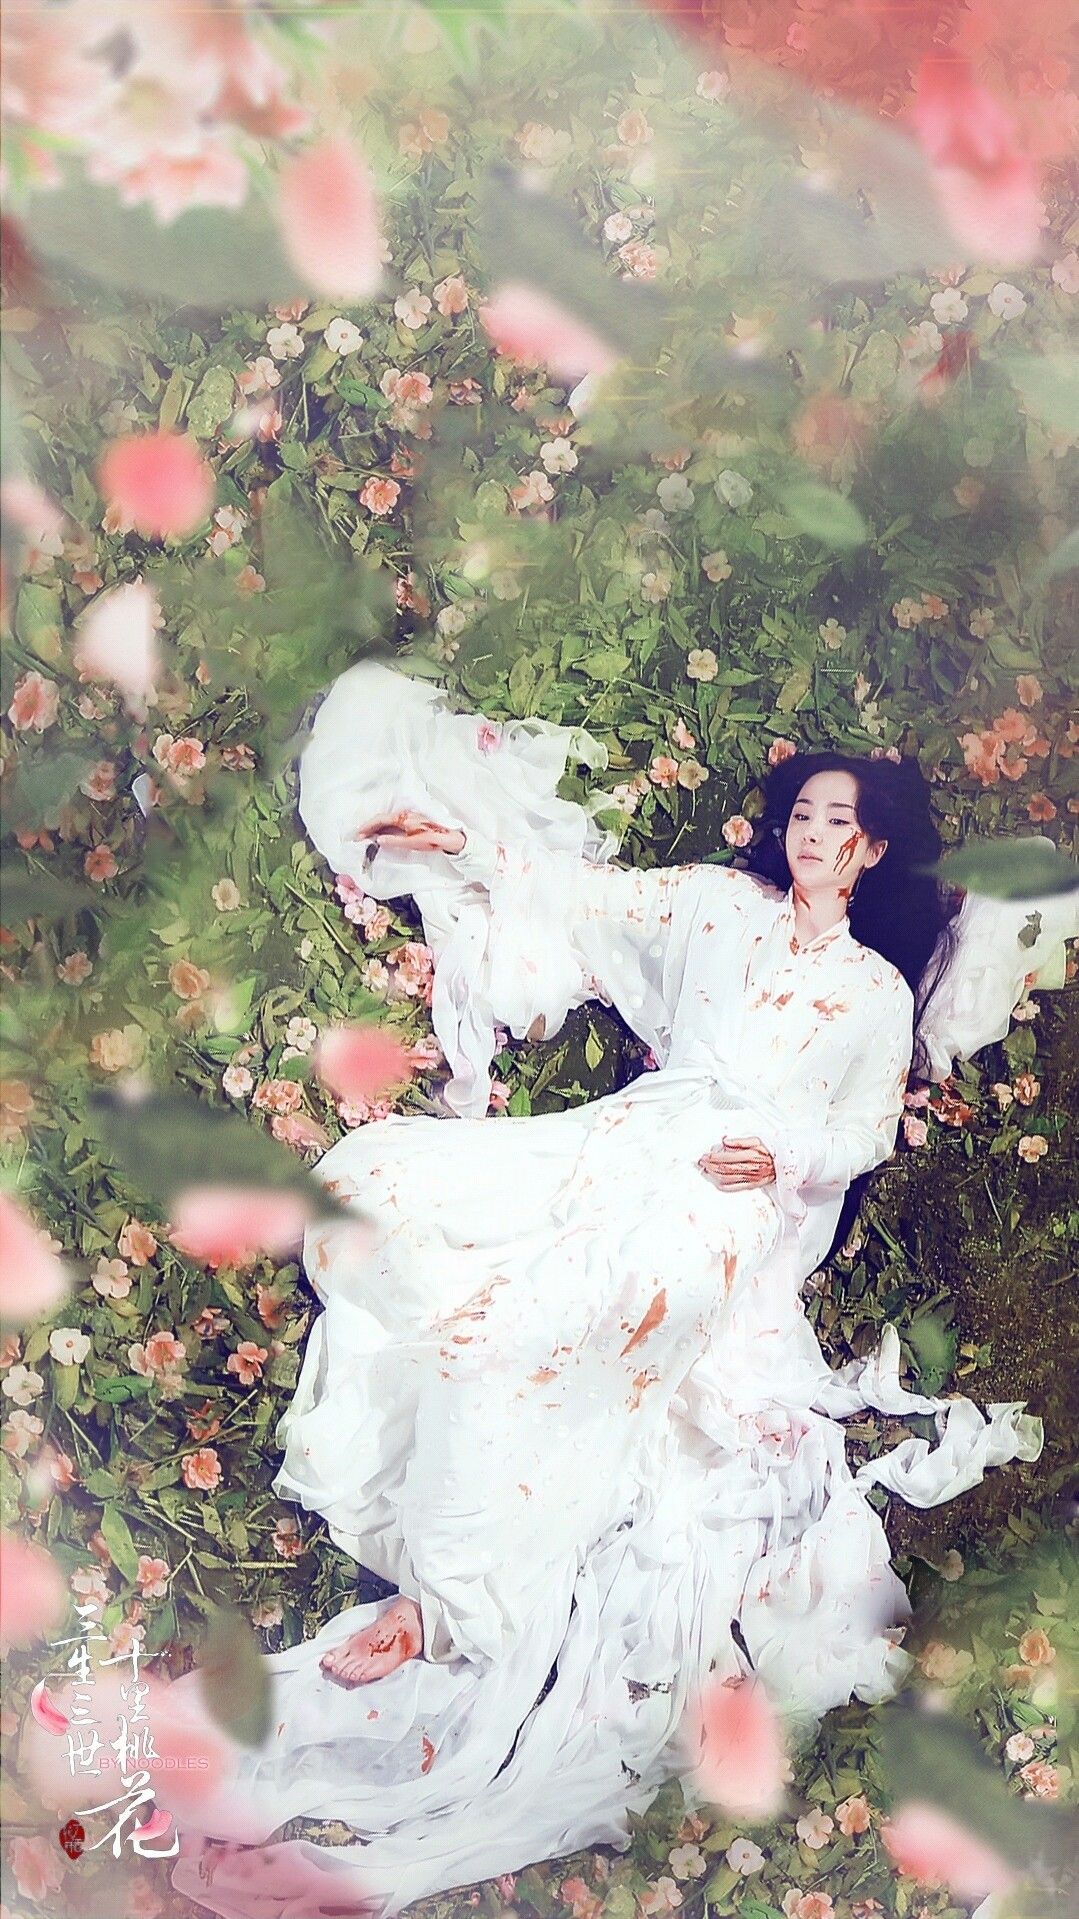 Lives 3 Worlds, 10 Miles of Peach Blossom #YangMi. Peach blossoms, Eternal love drama, Blossoms art